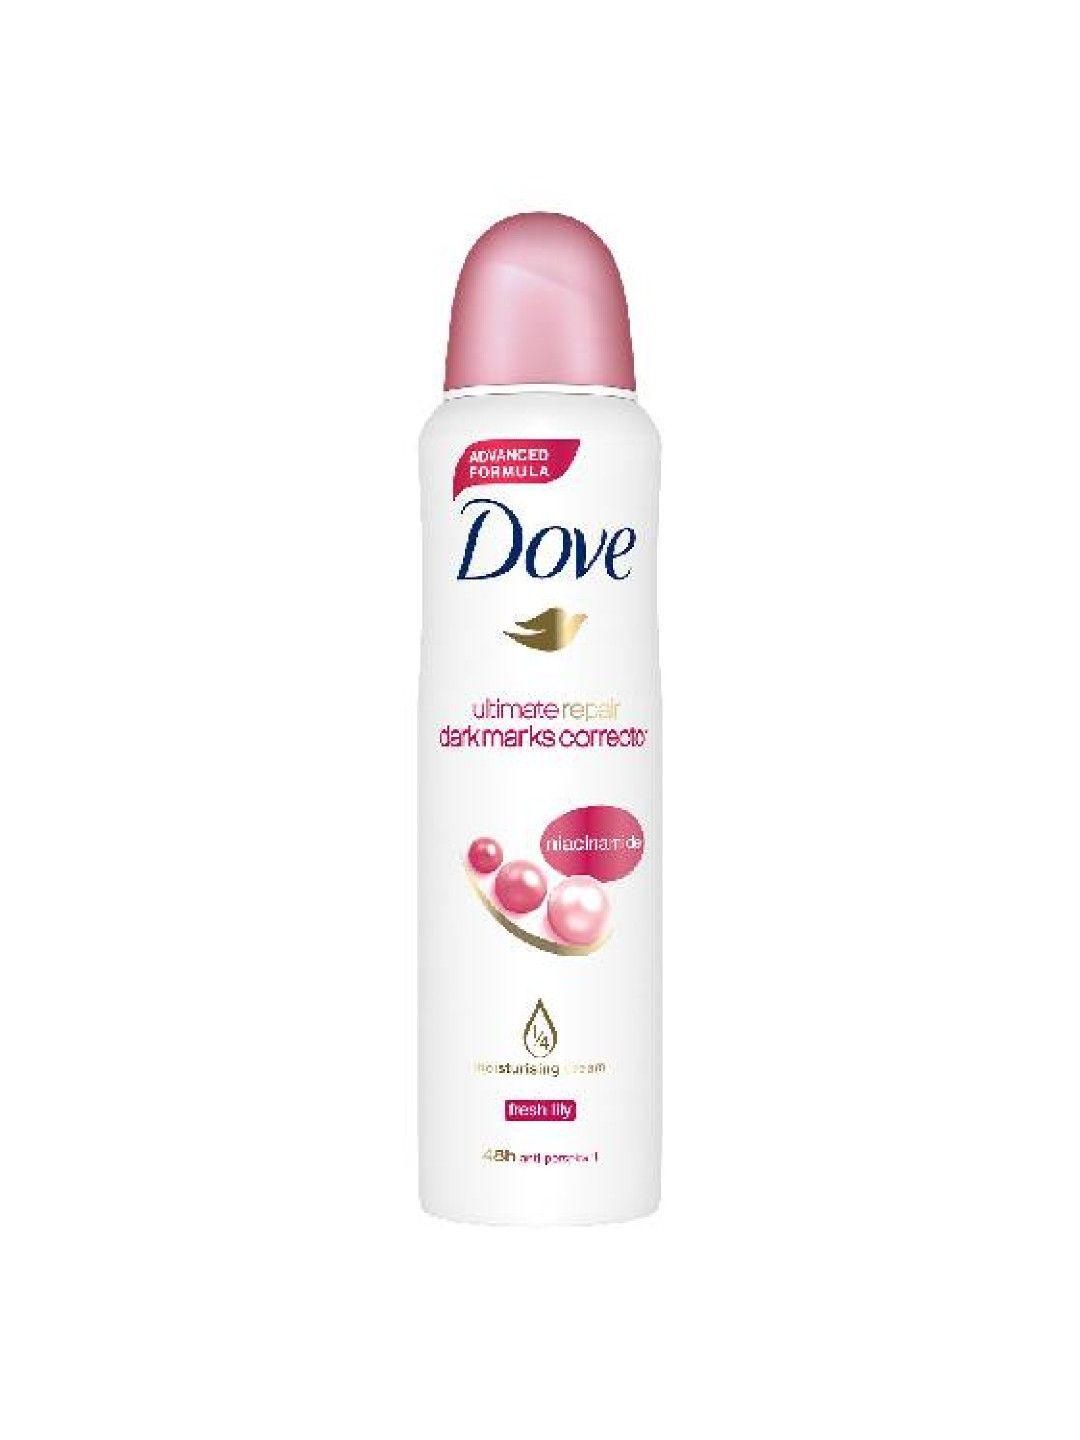 Dove Deodorant Spray Ultimate Repair Dark Marks Corrector Fresh Lily (135ml)